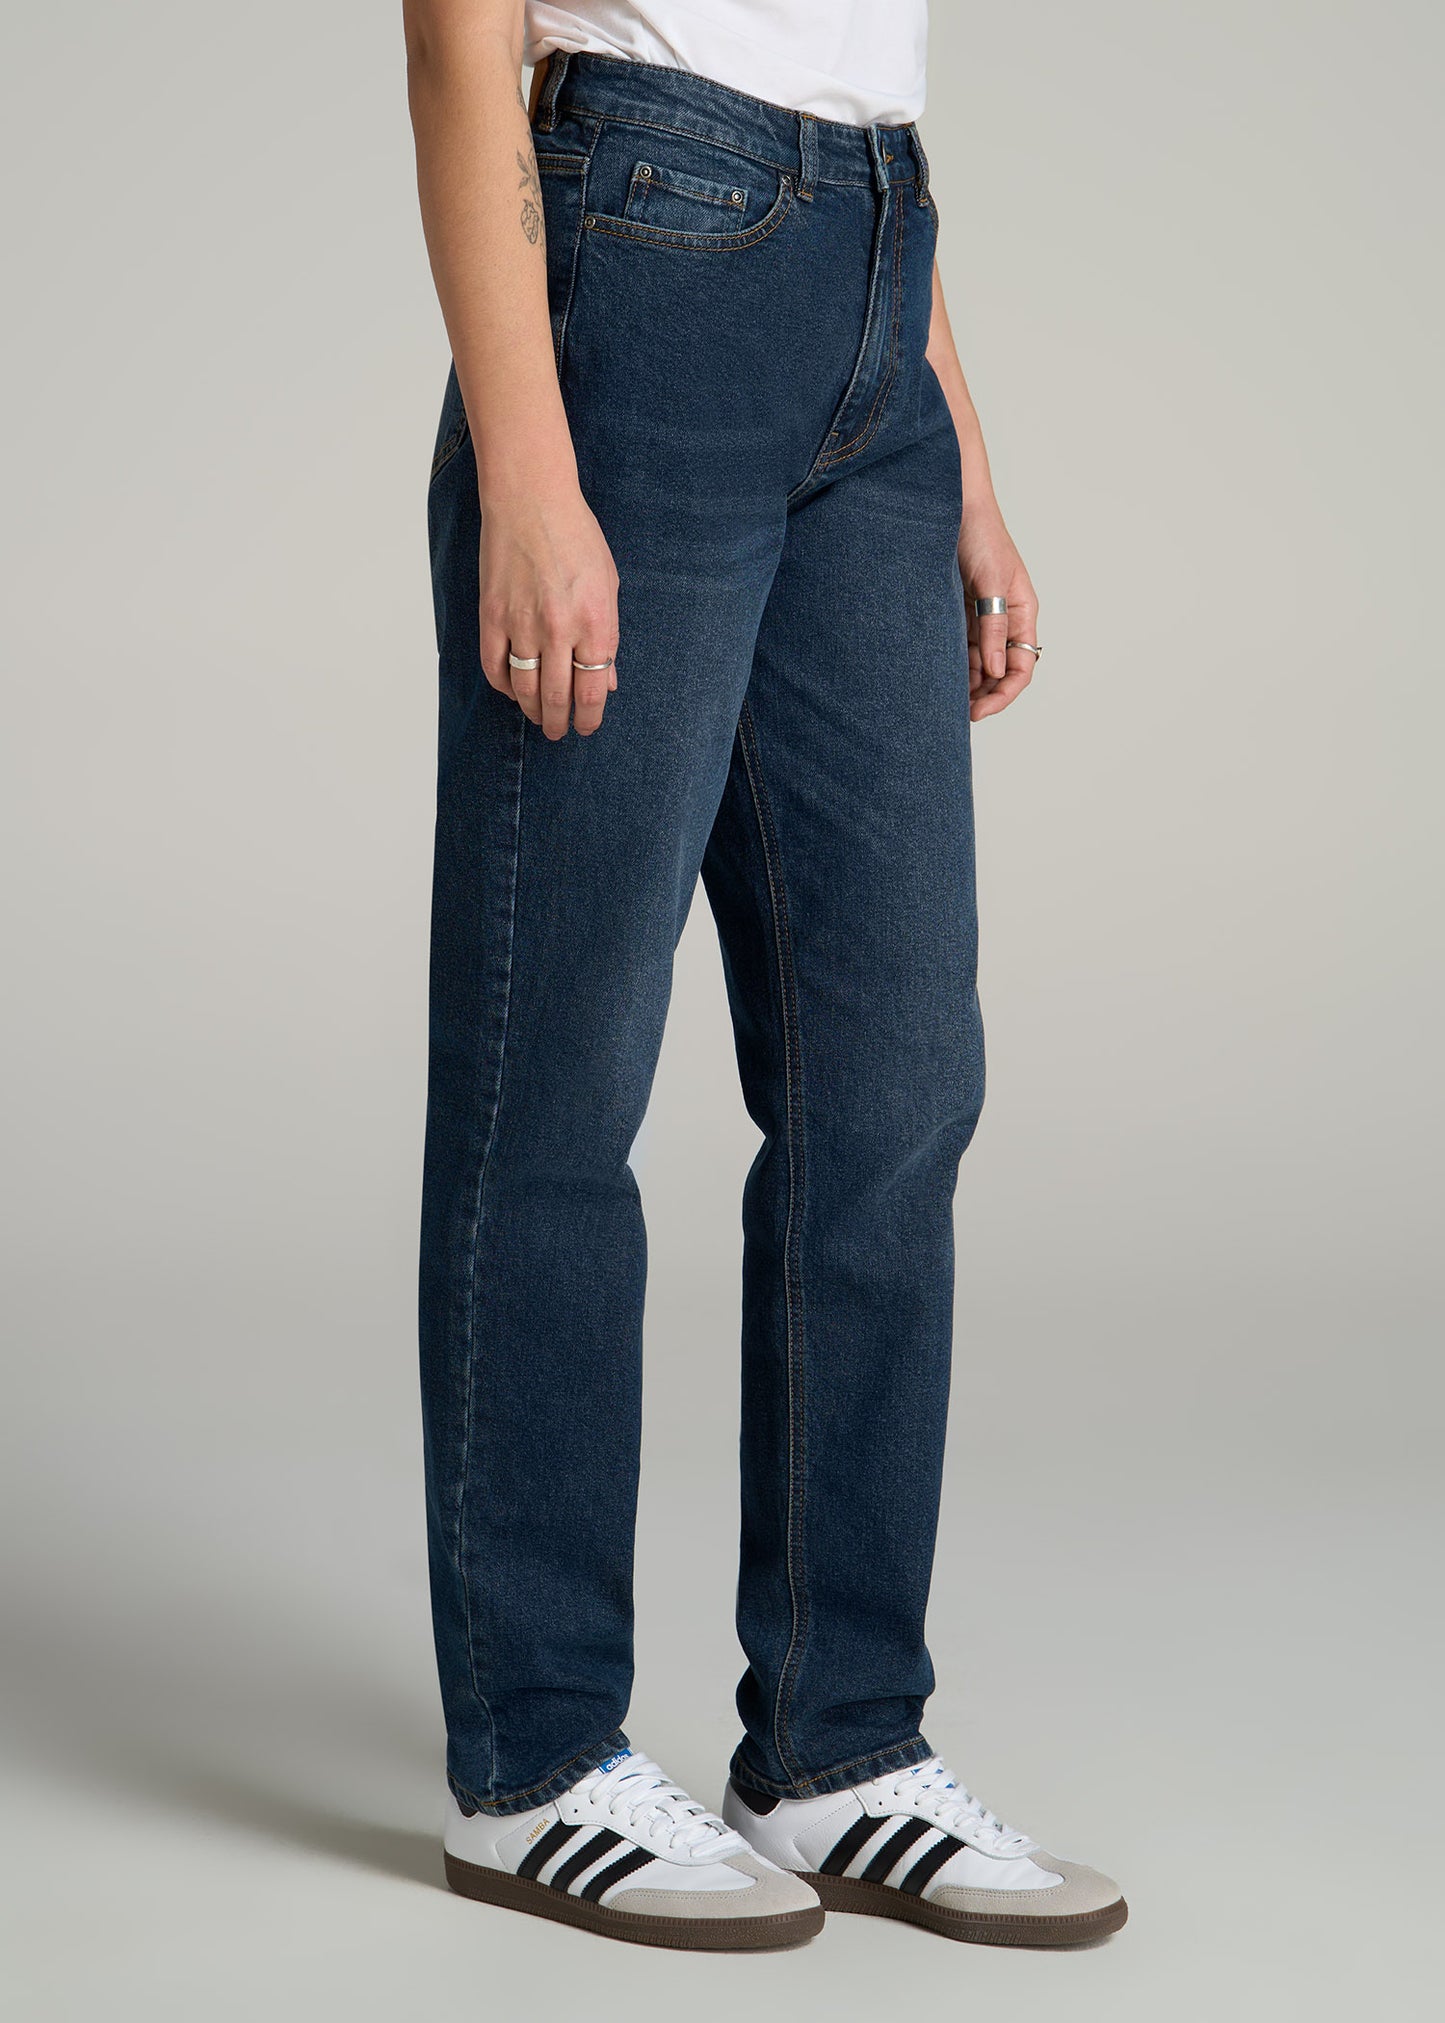 Emman Jeans - High Waisted Cotton Wide Leg Denim Jeans in Washed Black